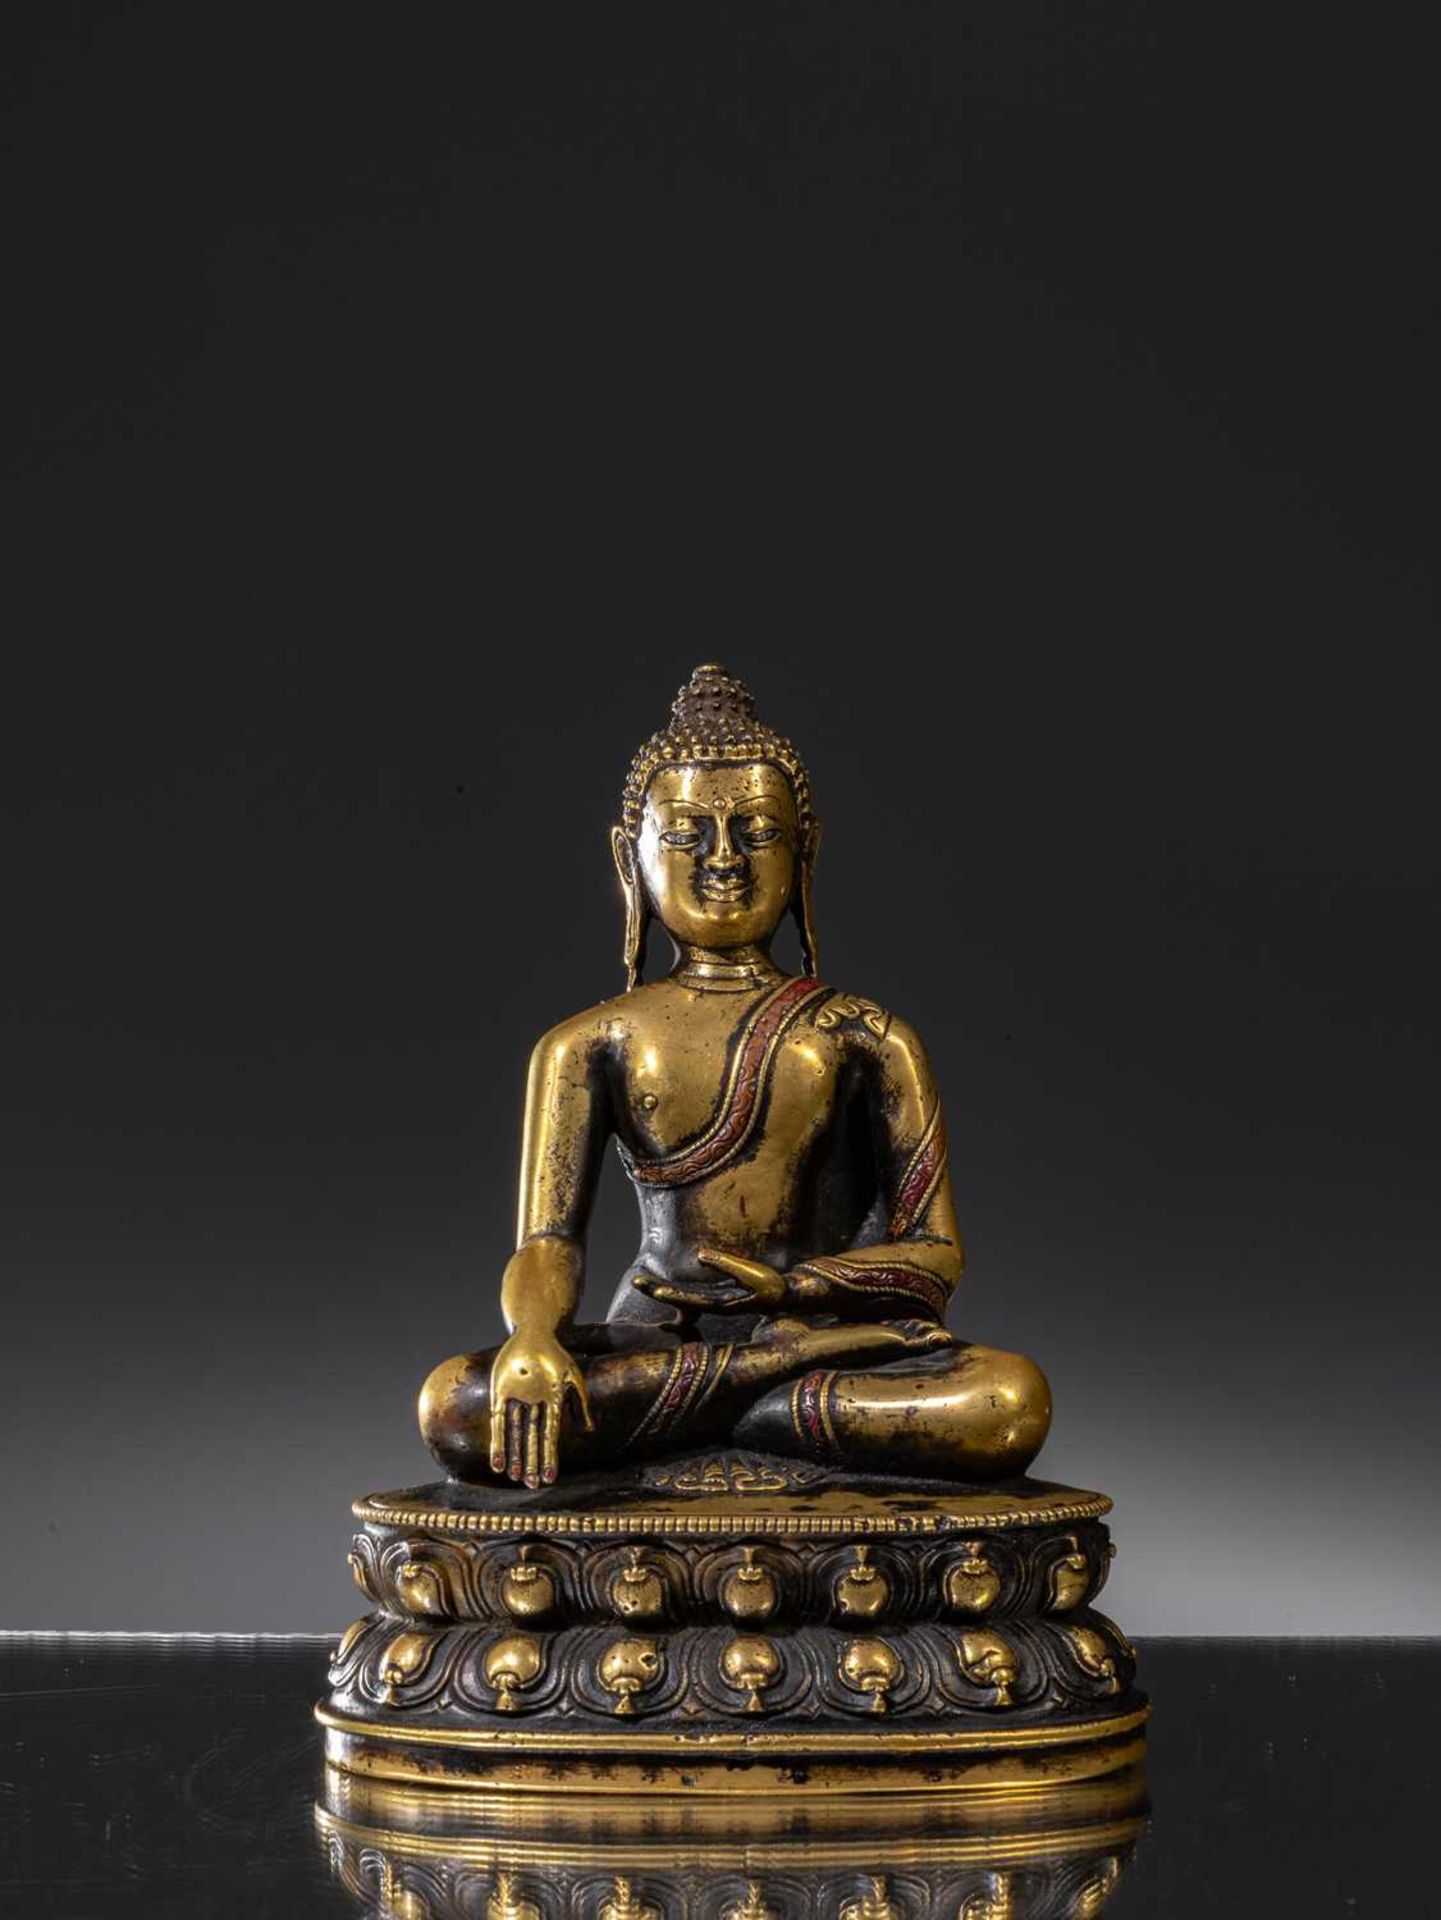 A LARGE SILVER AND COPPER  INLAID BRONZE FIGURE OF SHAKYAMUNI BUDDHA, TIBET, 15TH CENTURY